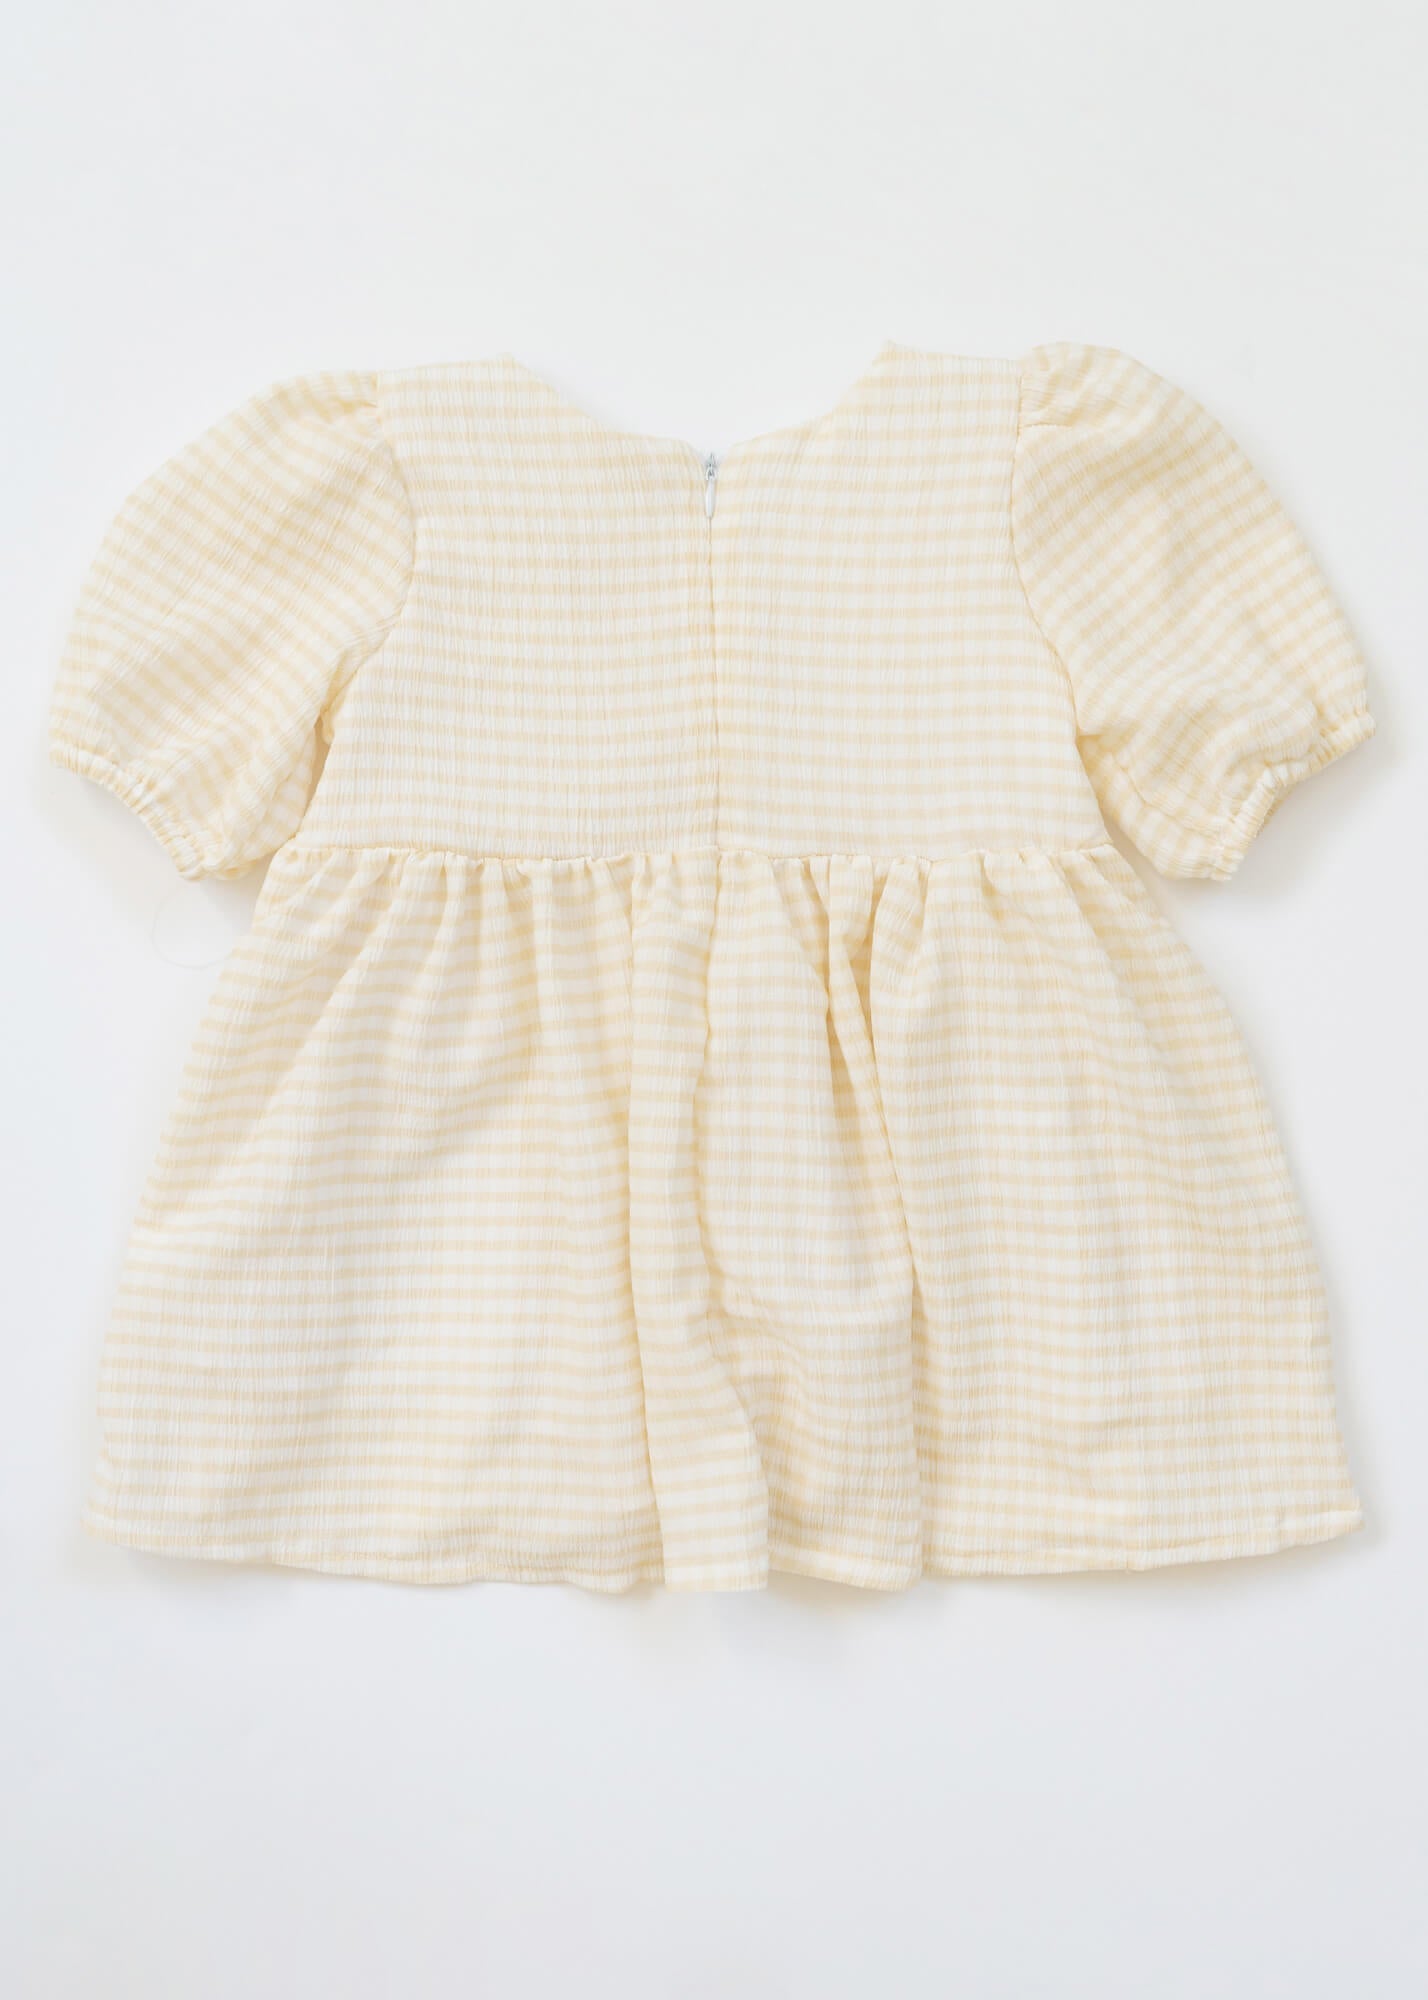 PENELOPE Gingham Puff Sleeve Dress girls baby toddler yellow summer dress cute girly